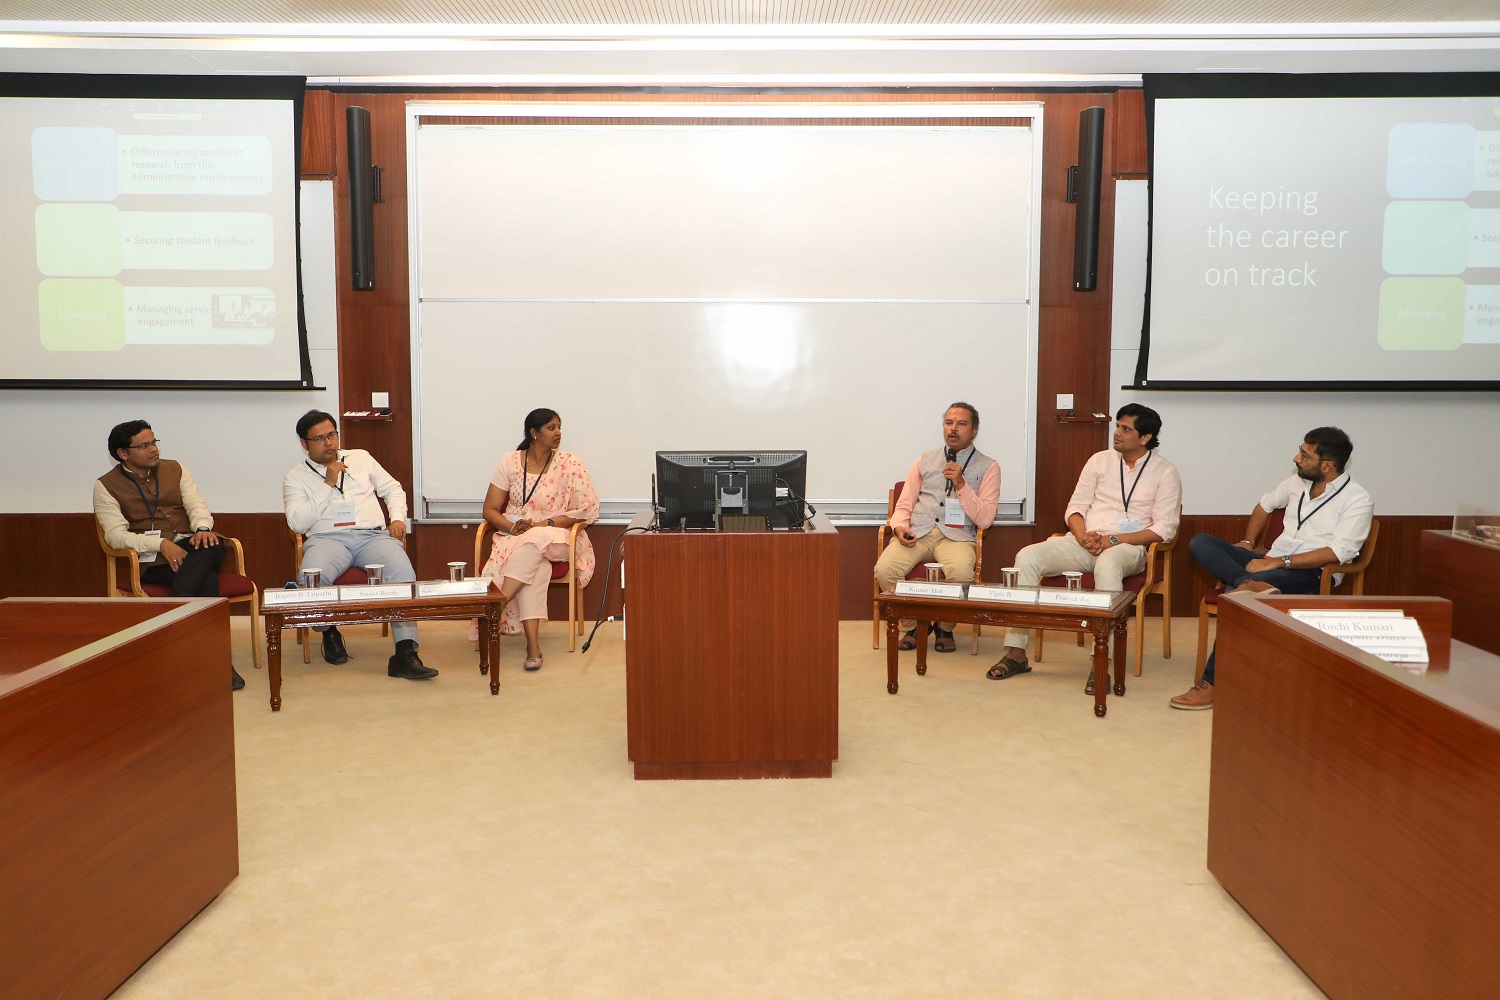 (L-R) Dr Rajeev R. Tripathi, IIM Bangalore, Dr. Sourav Borah, IIM Ahmedabad, Dr. Sowmya Subramaniam, IIM Lucknow, Dr. Kumar Alok, XLRI Jamshedpur, Dr. Vipin B, IIT Kanpur, and Dr. Prateek Raj, IIM Bangalore, at the panel discussion on ‘Navigating an Academic Career: Insights from Early-Career Academics’.